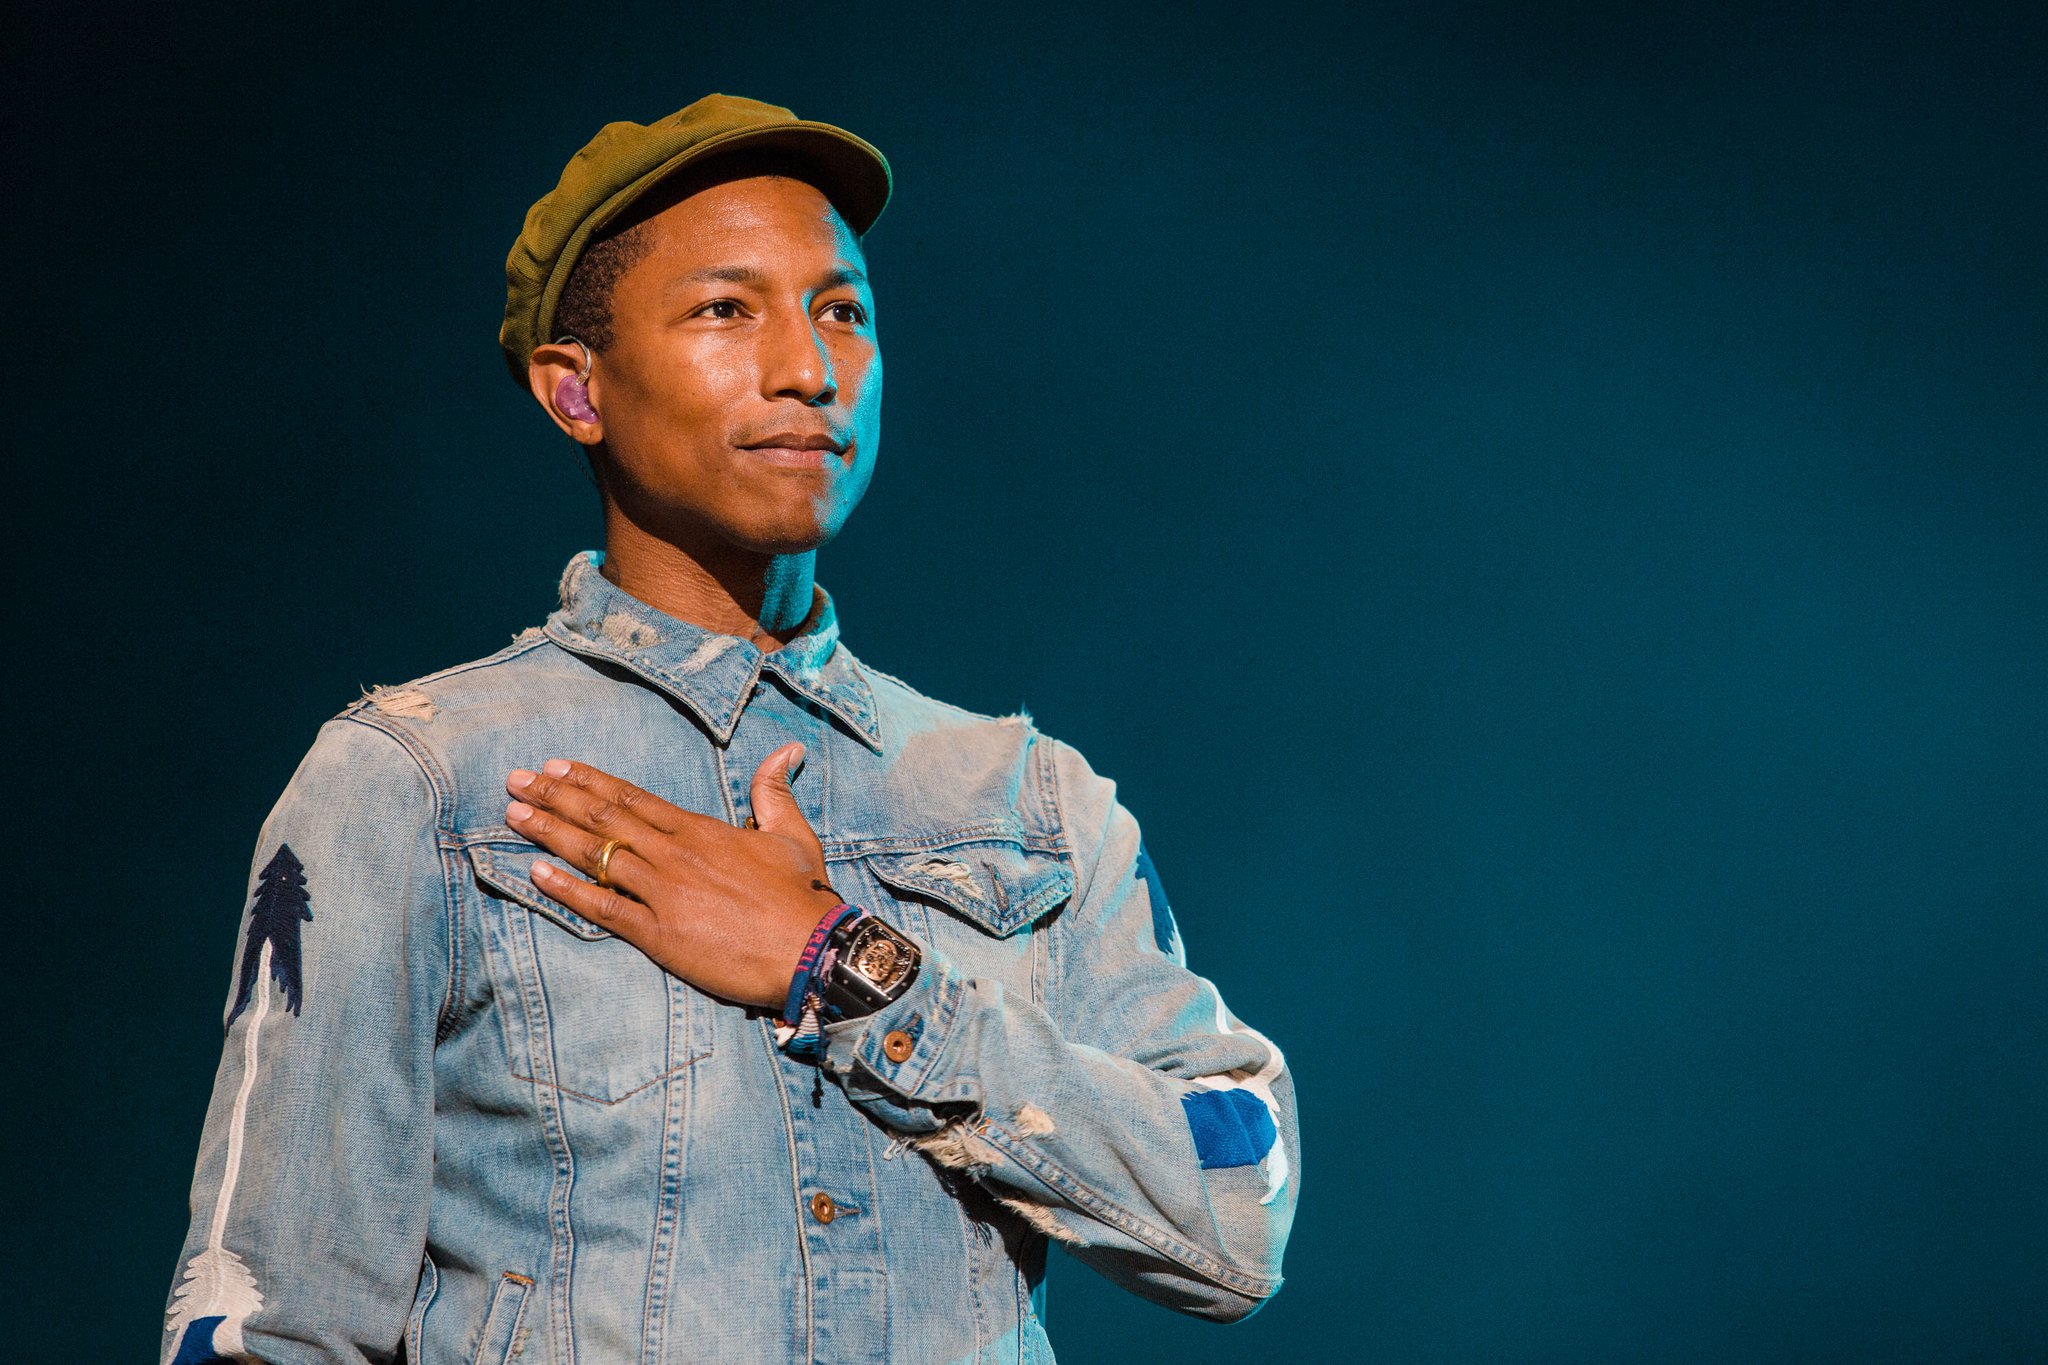 Let\s all wish Pharrell Williams a \"Happy\" Birthday!
.
.
.
.
( : Mauricio Santana / Stringer via Getty Images) 